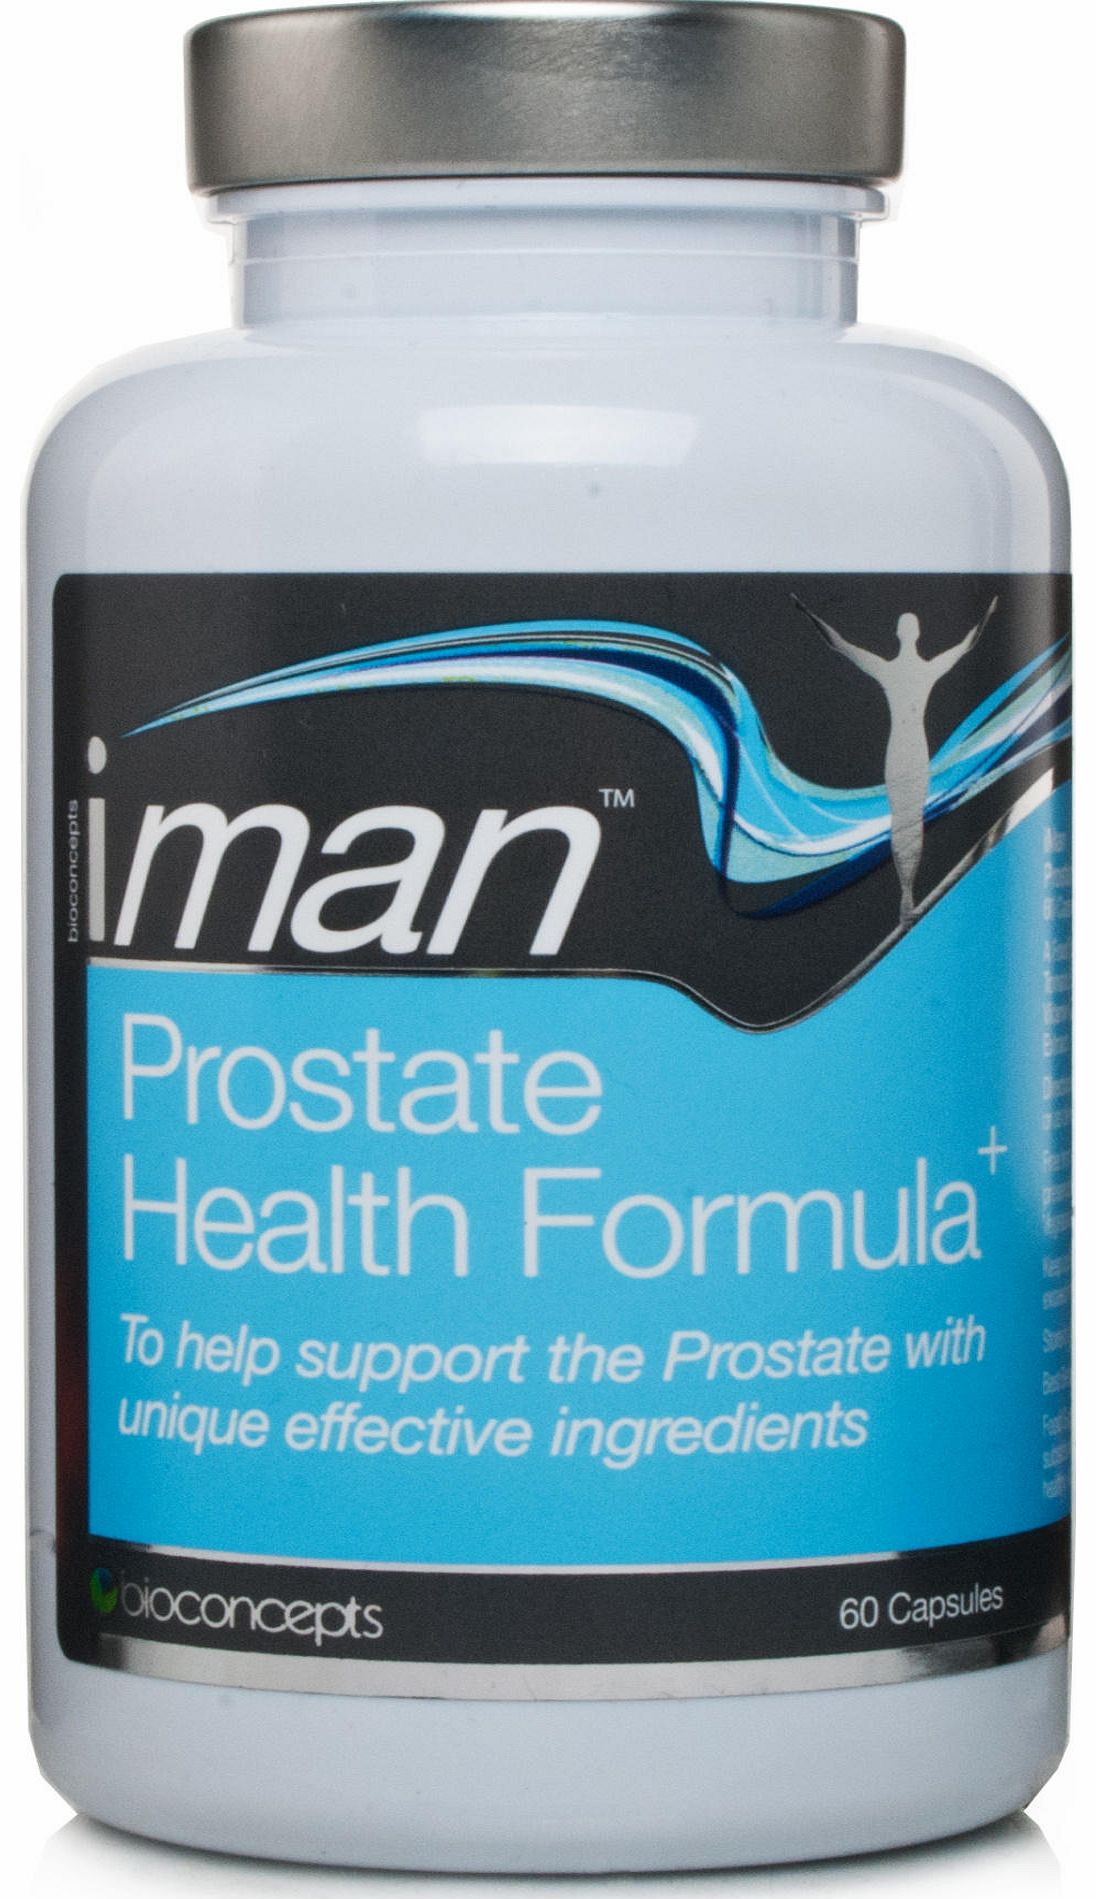 Bioconcepts iman Prostate Health Formula  